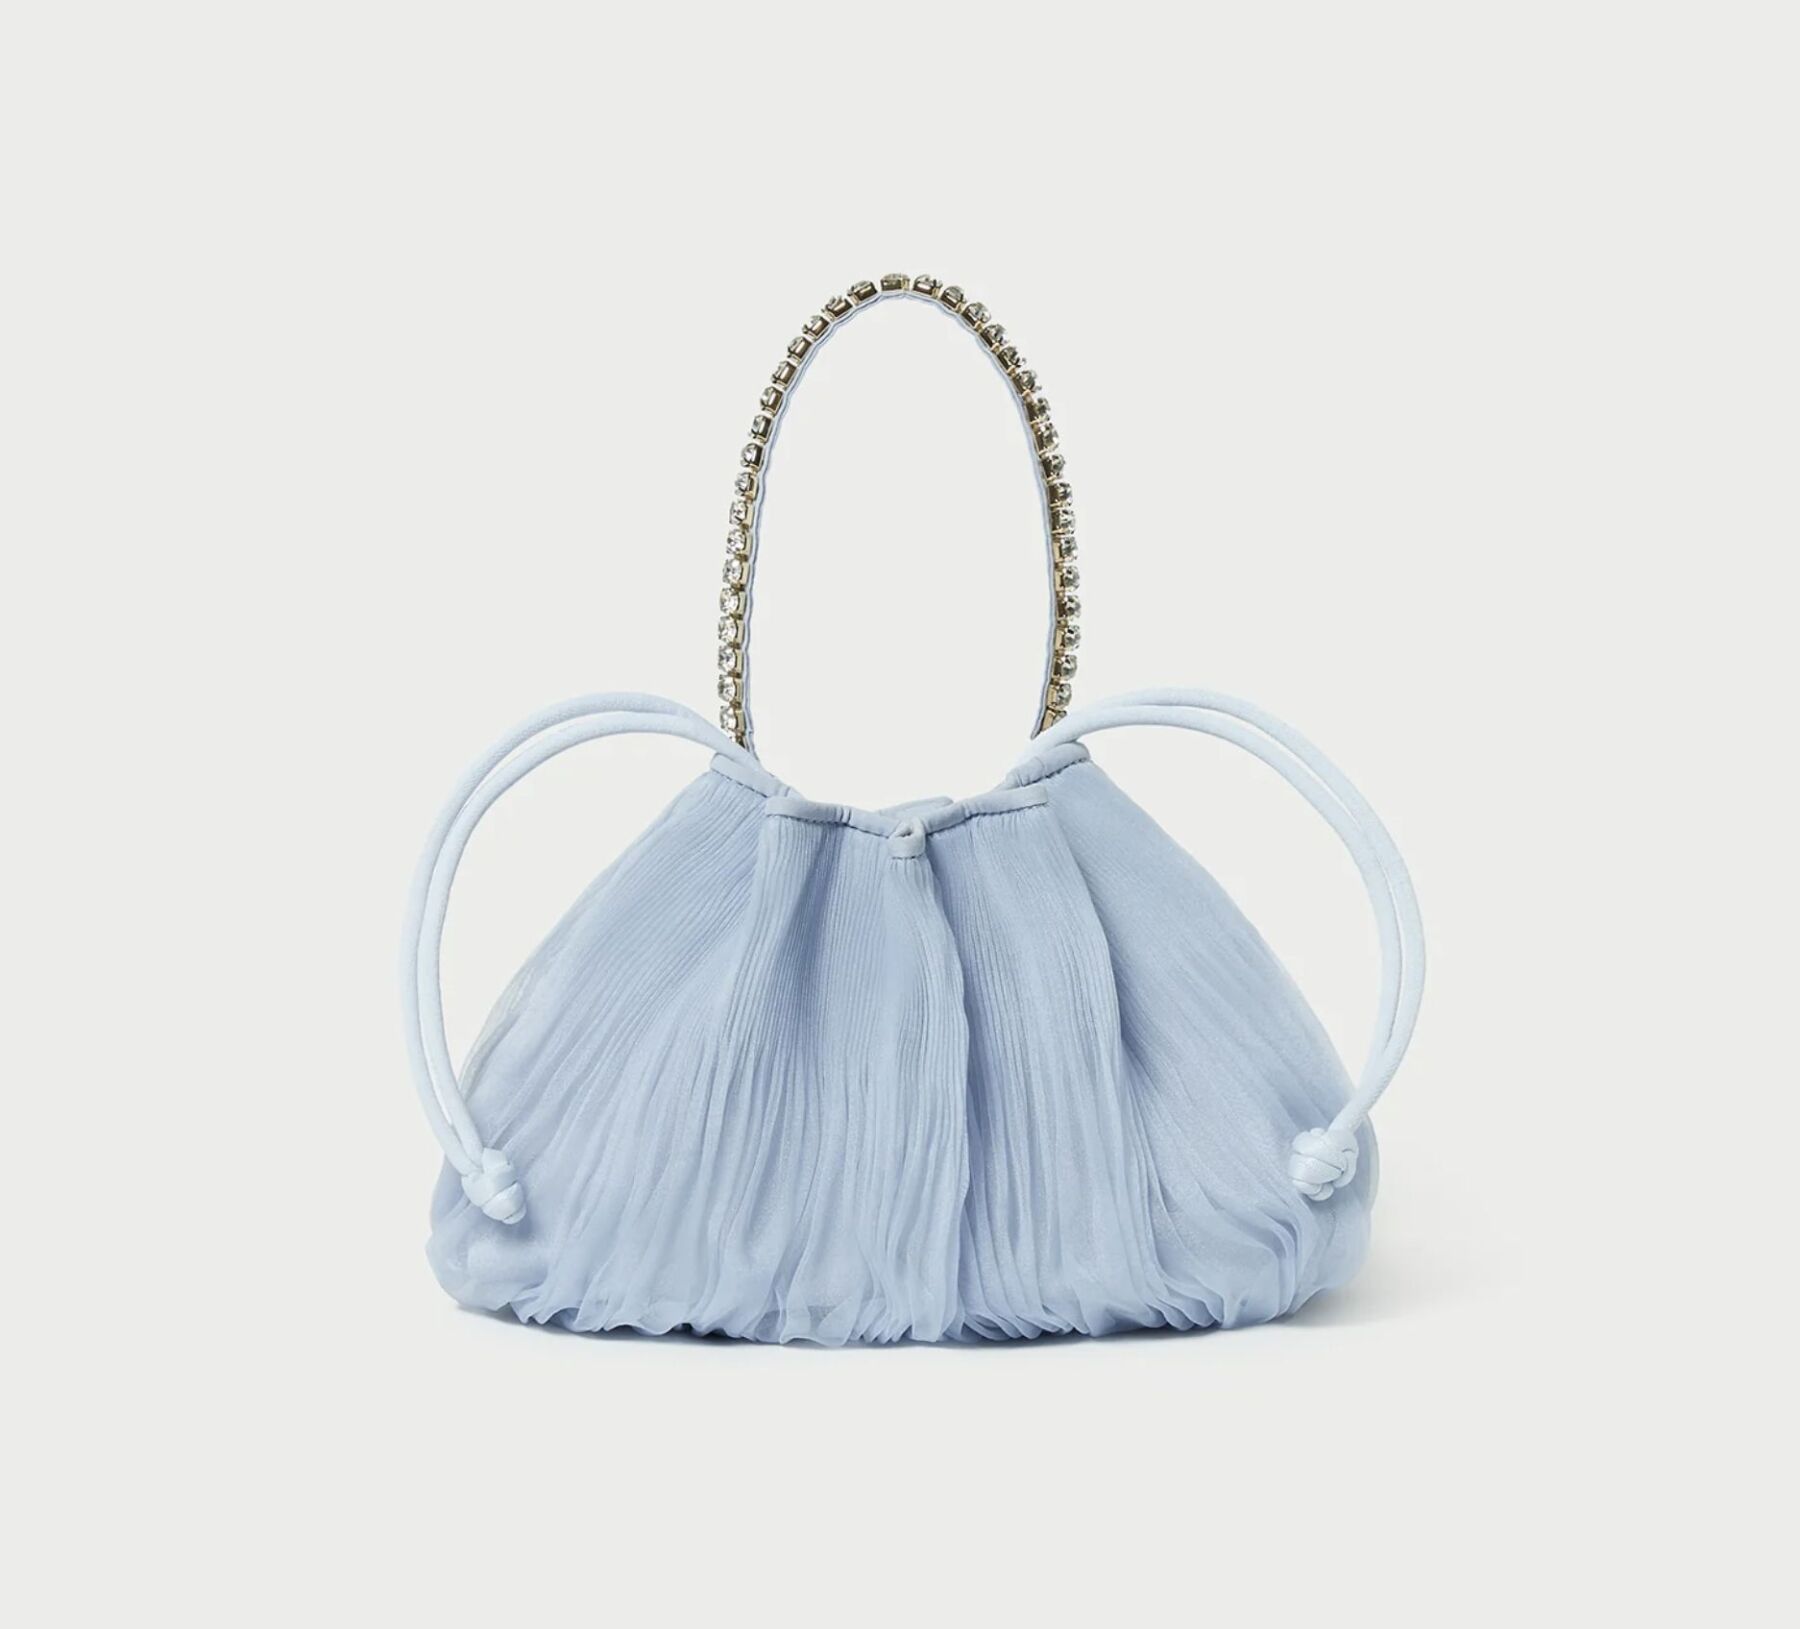 Loeffler Randall pale blue bridal clutch bag